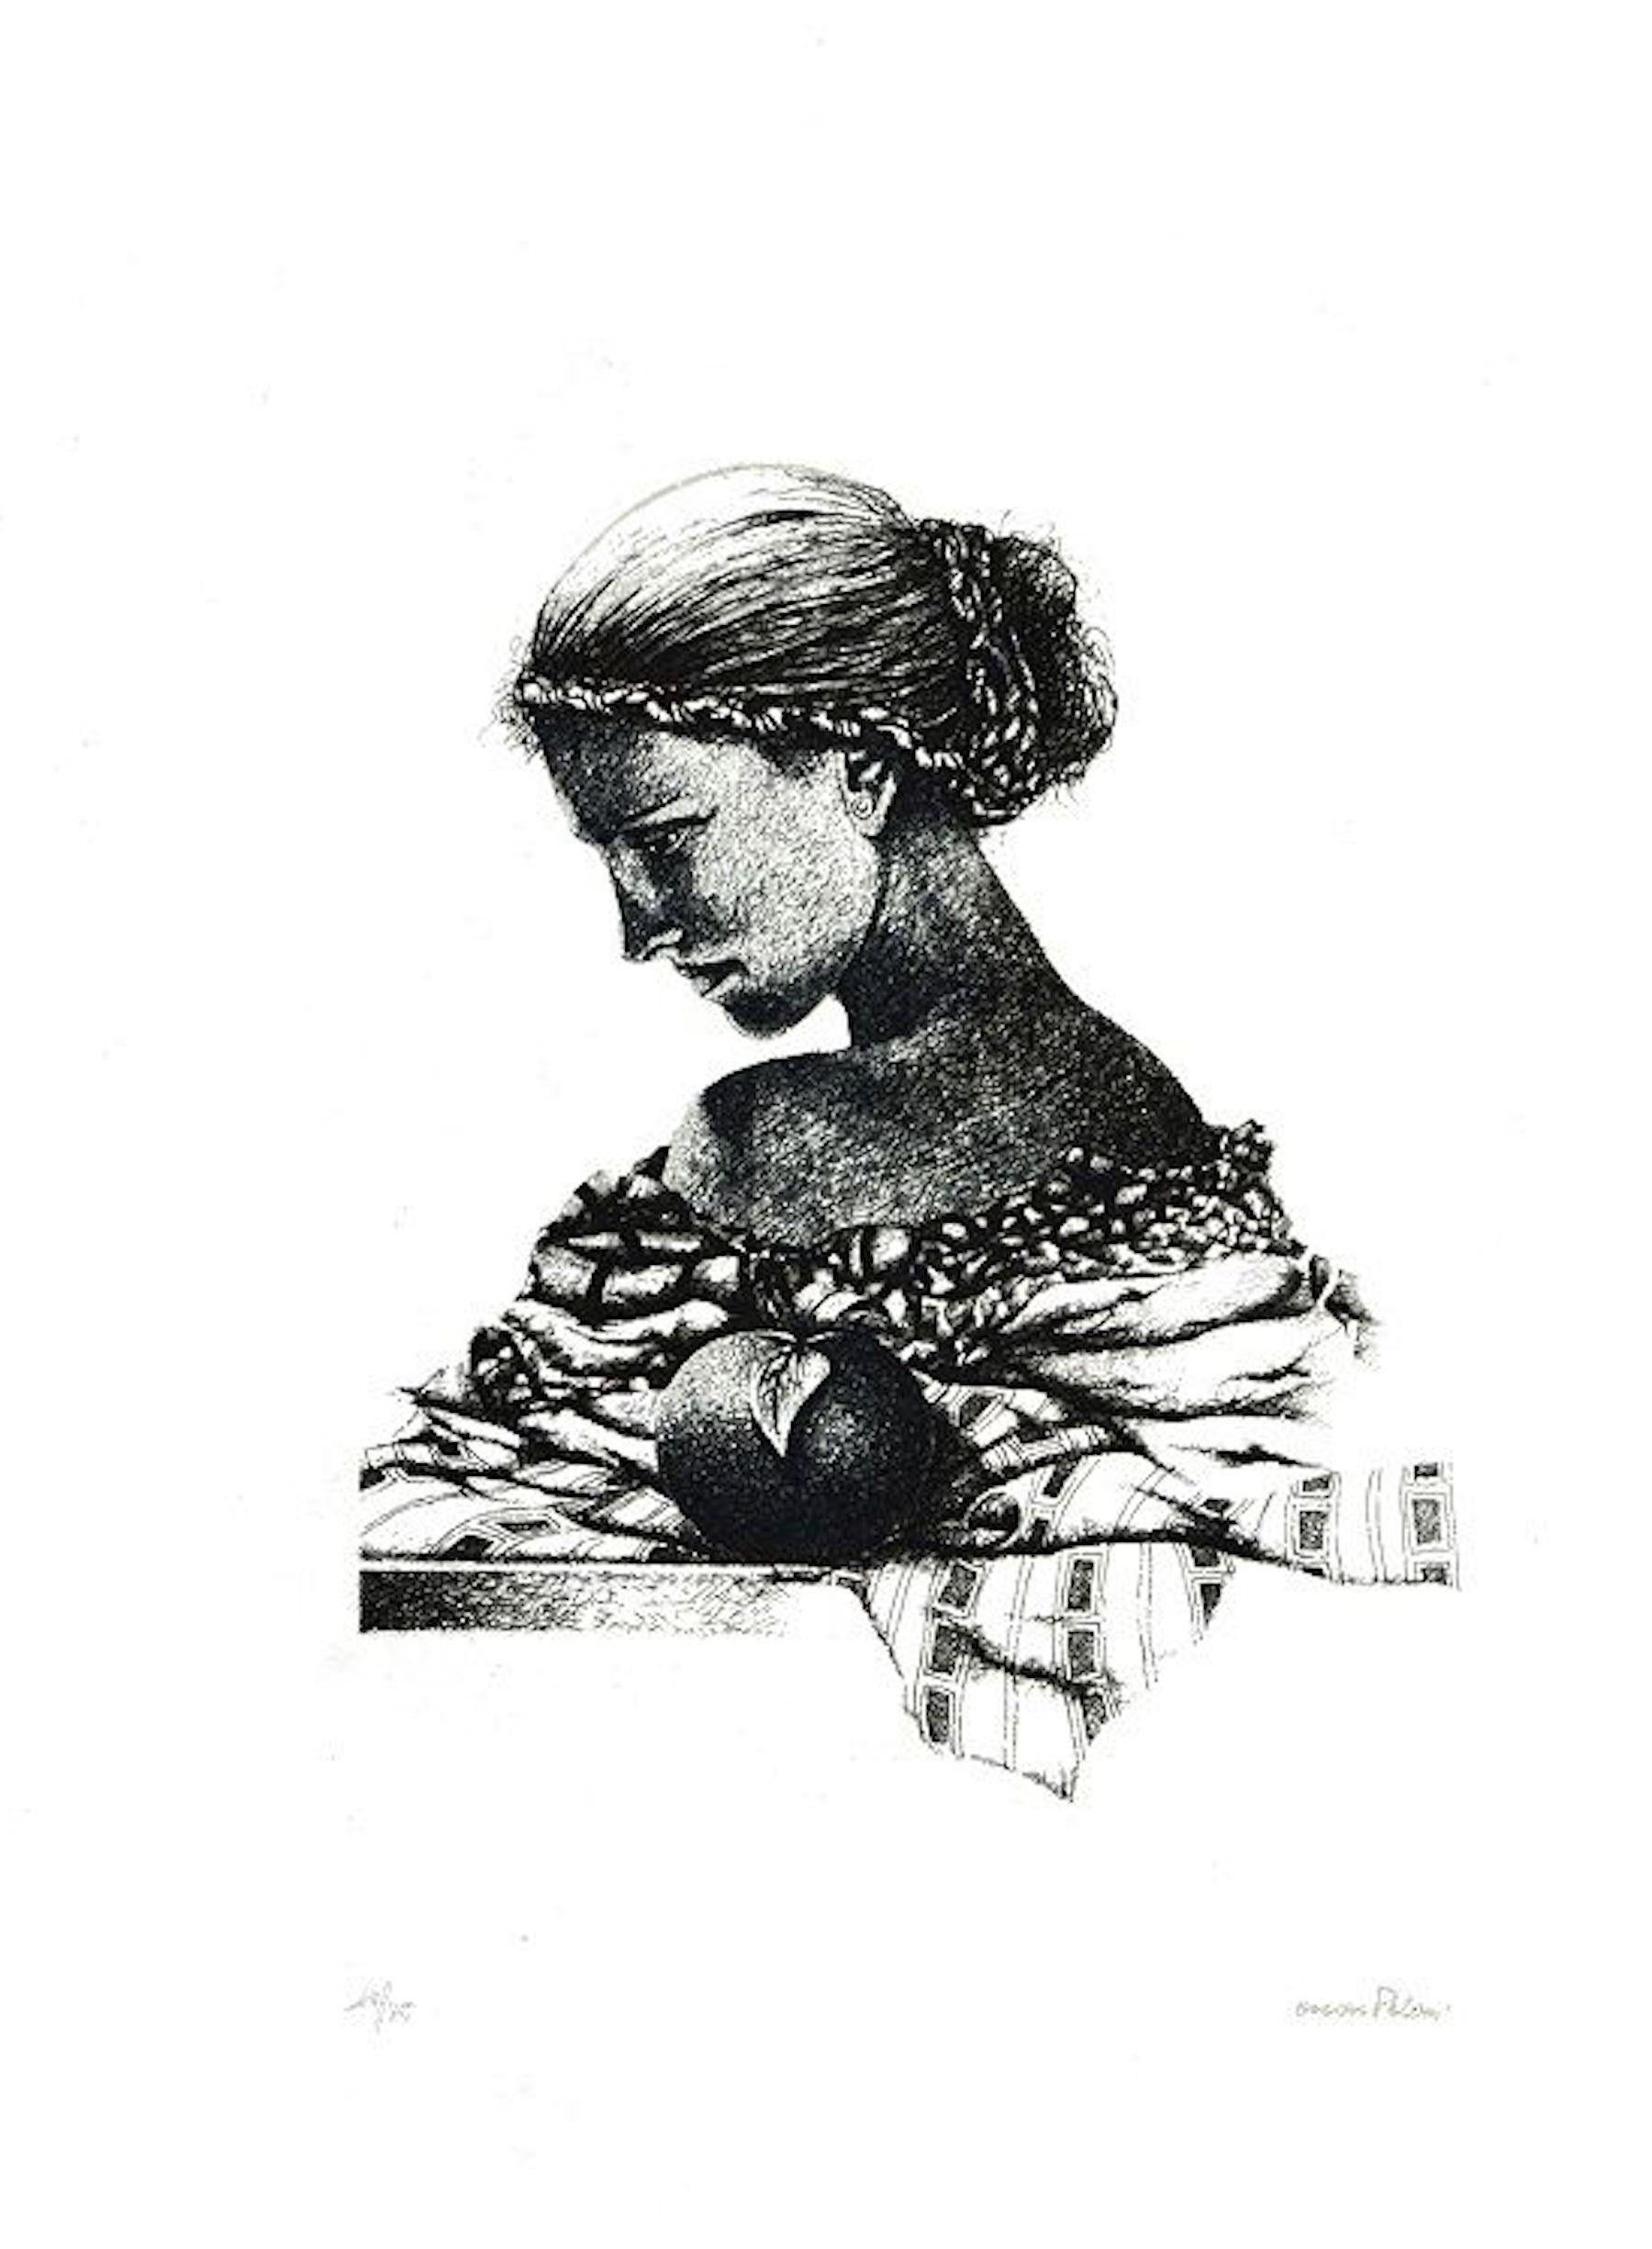 Woman - Original Screen Print by Oscar Pelosi - 1980s